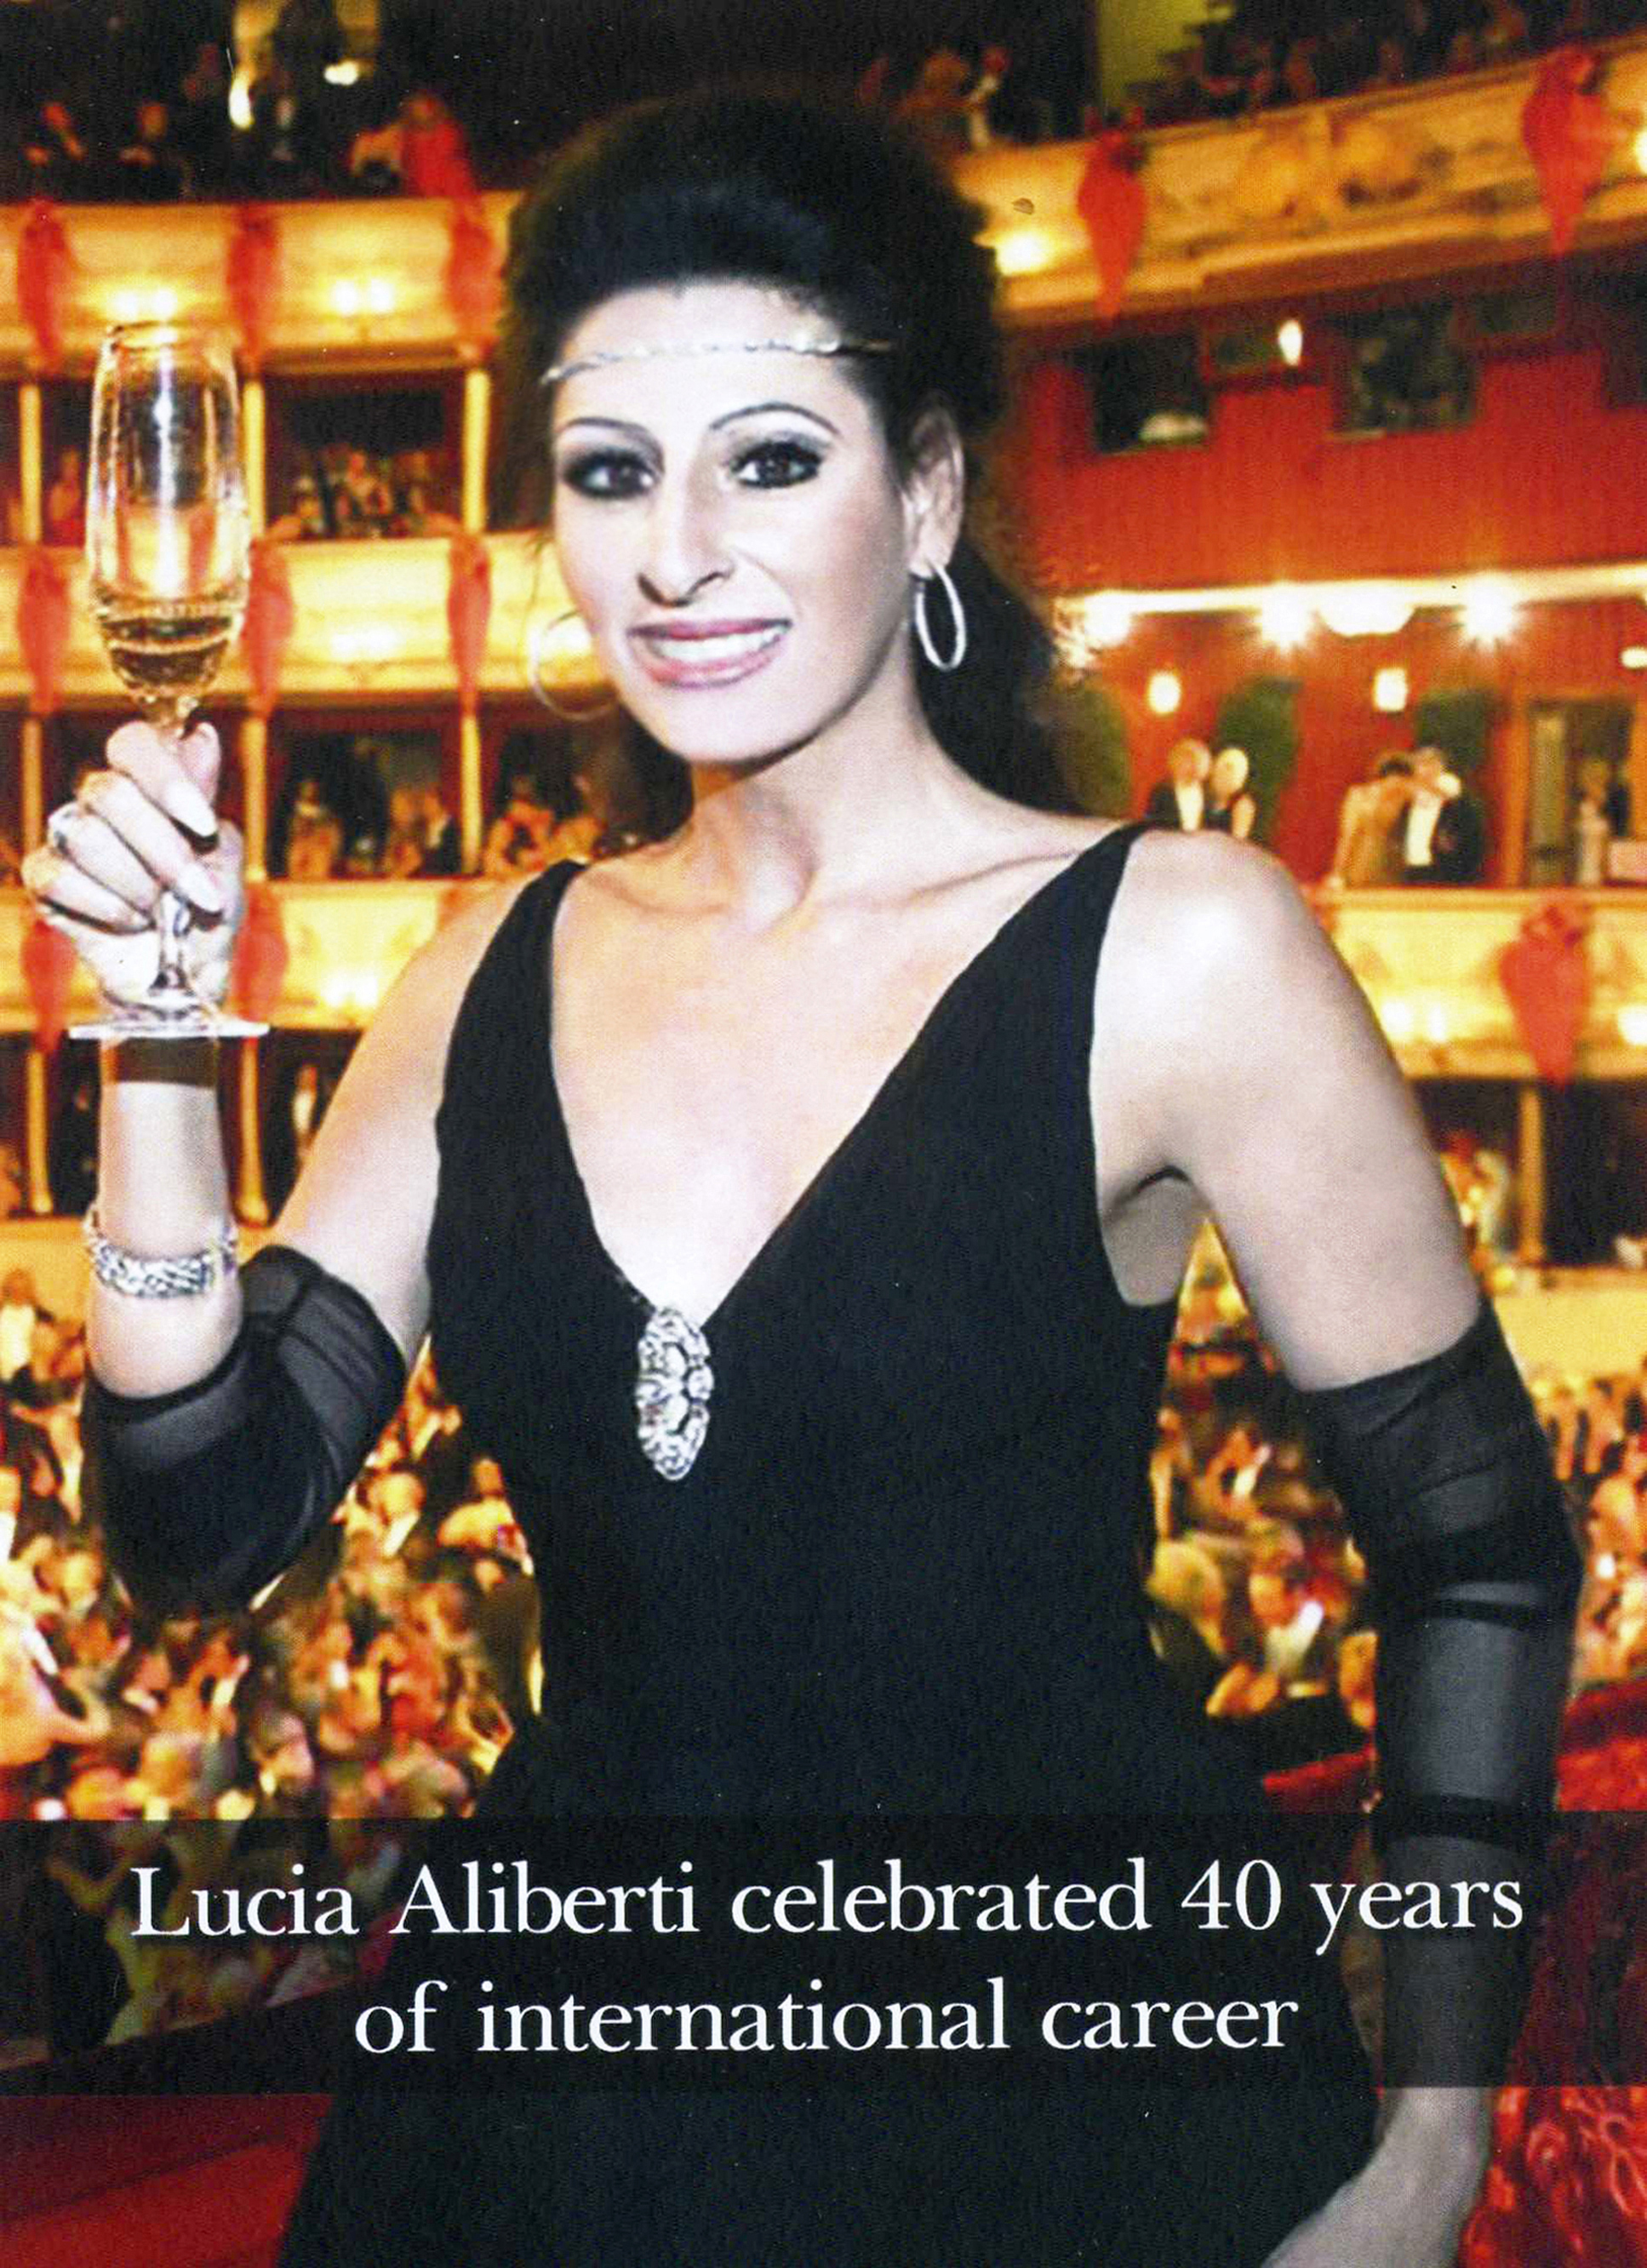 Lucia Aliberti⚘celebrated 40 years of International Career⚘DVD⚘Digital Recording⚘PKV Production⚘:http://www.luciaaliberti.it #luciaaliberti #pkvproduction #digitalrecording #dvd